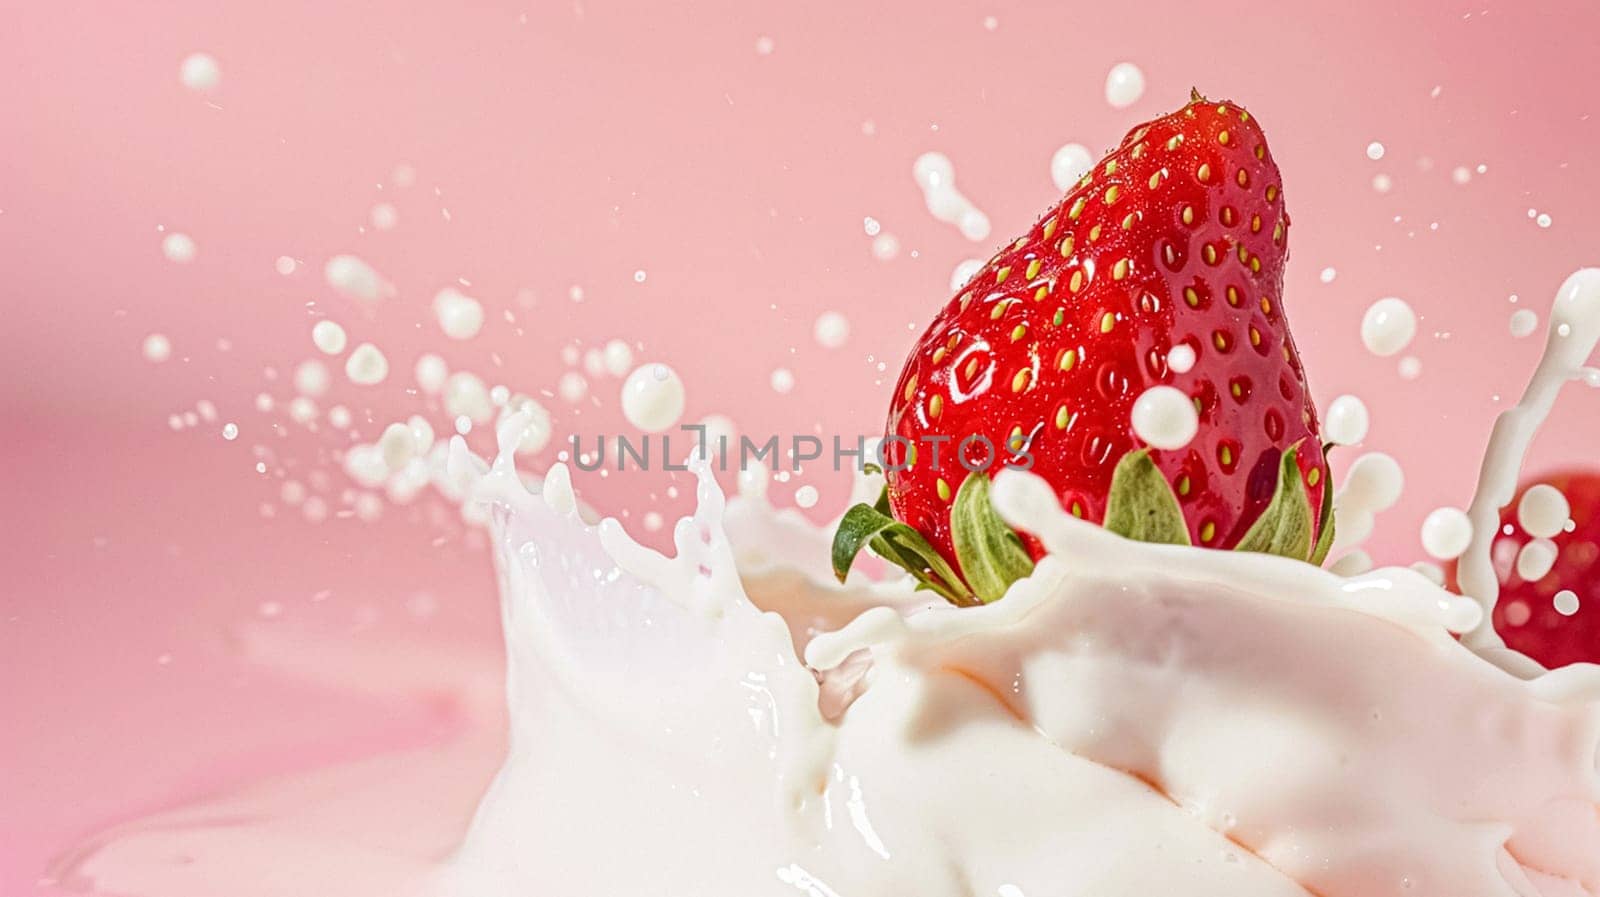 Strawberries falling into cream, milk or yoghurt on pink background, strawberry dessert by Anneleven